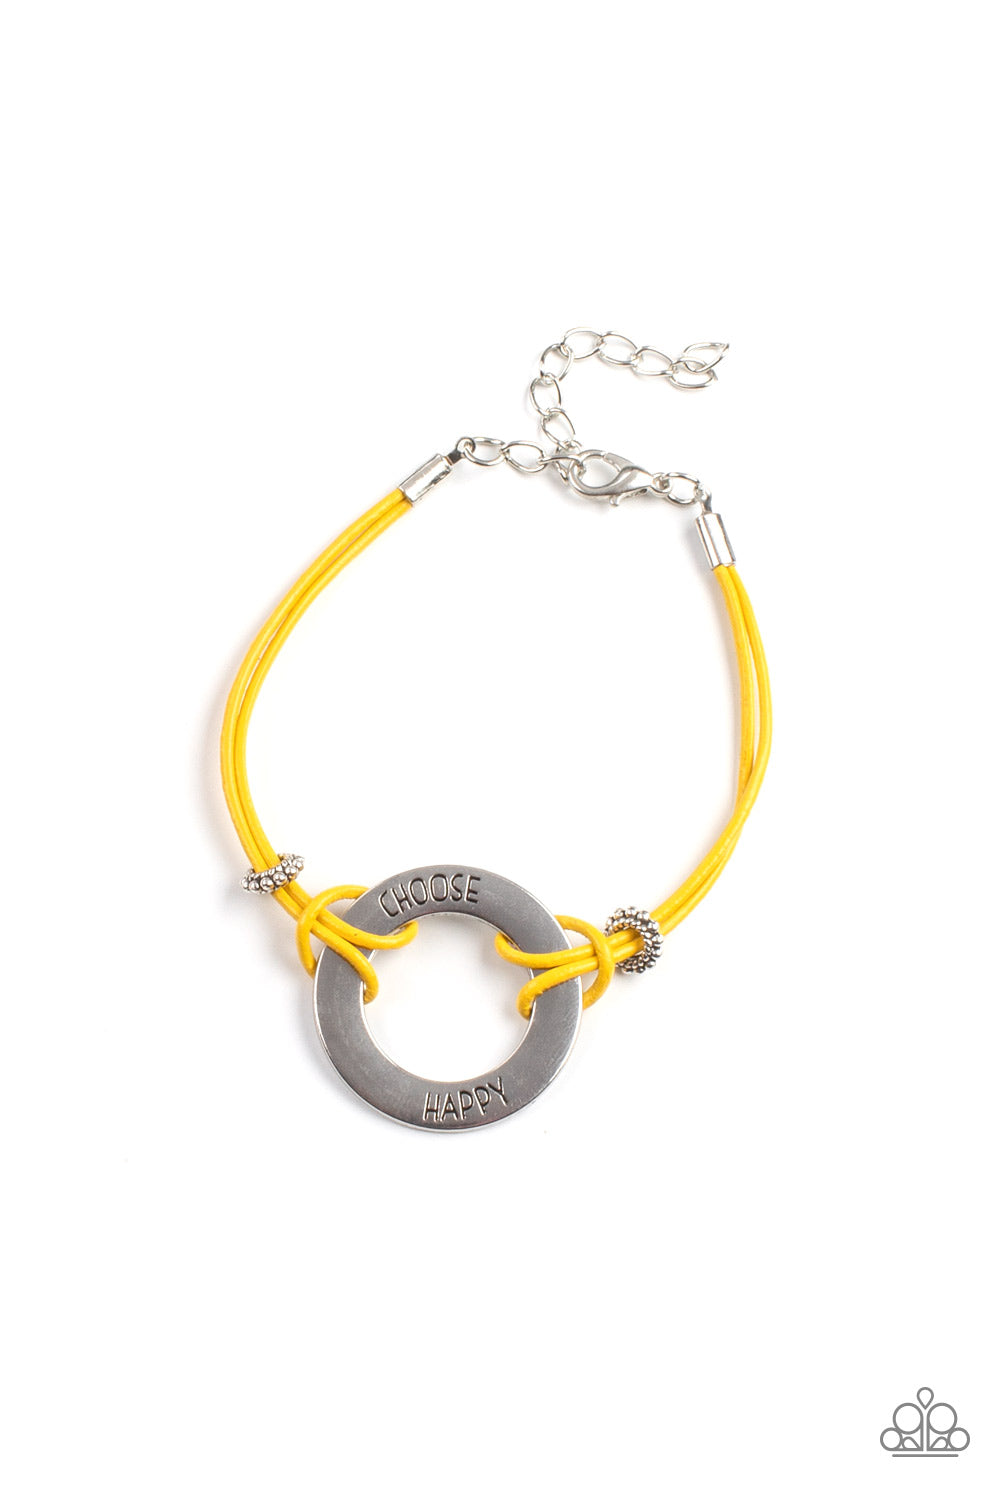 Choose Happy - Yellow Bracelet freeshipping - JewLz4u Gemstone Gallery